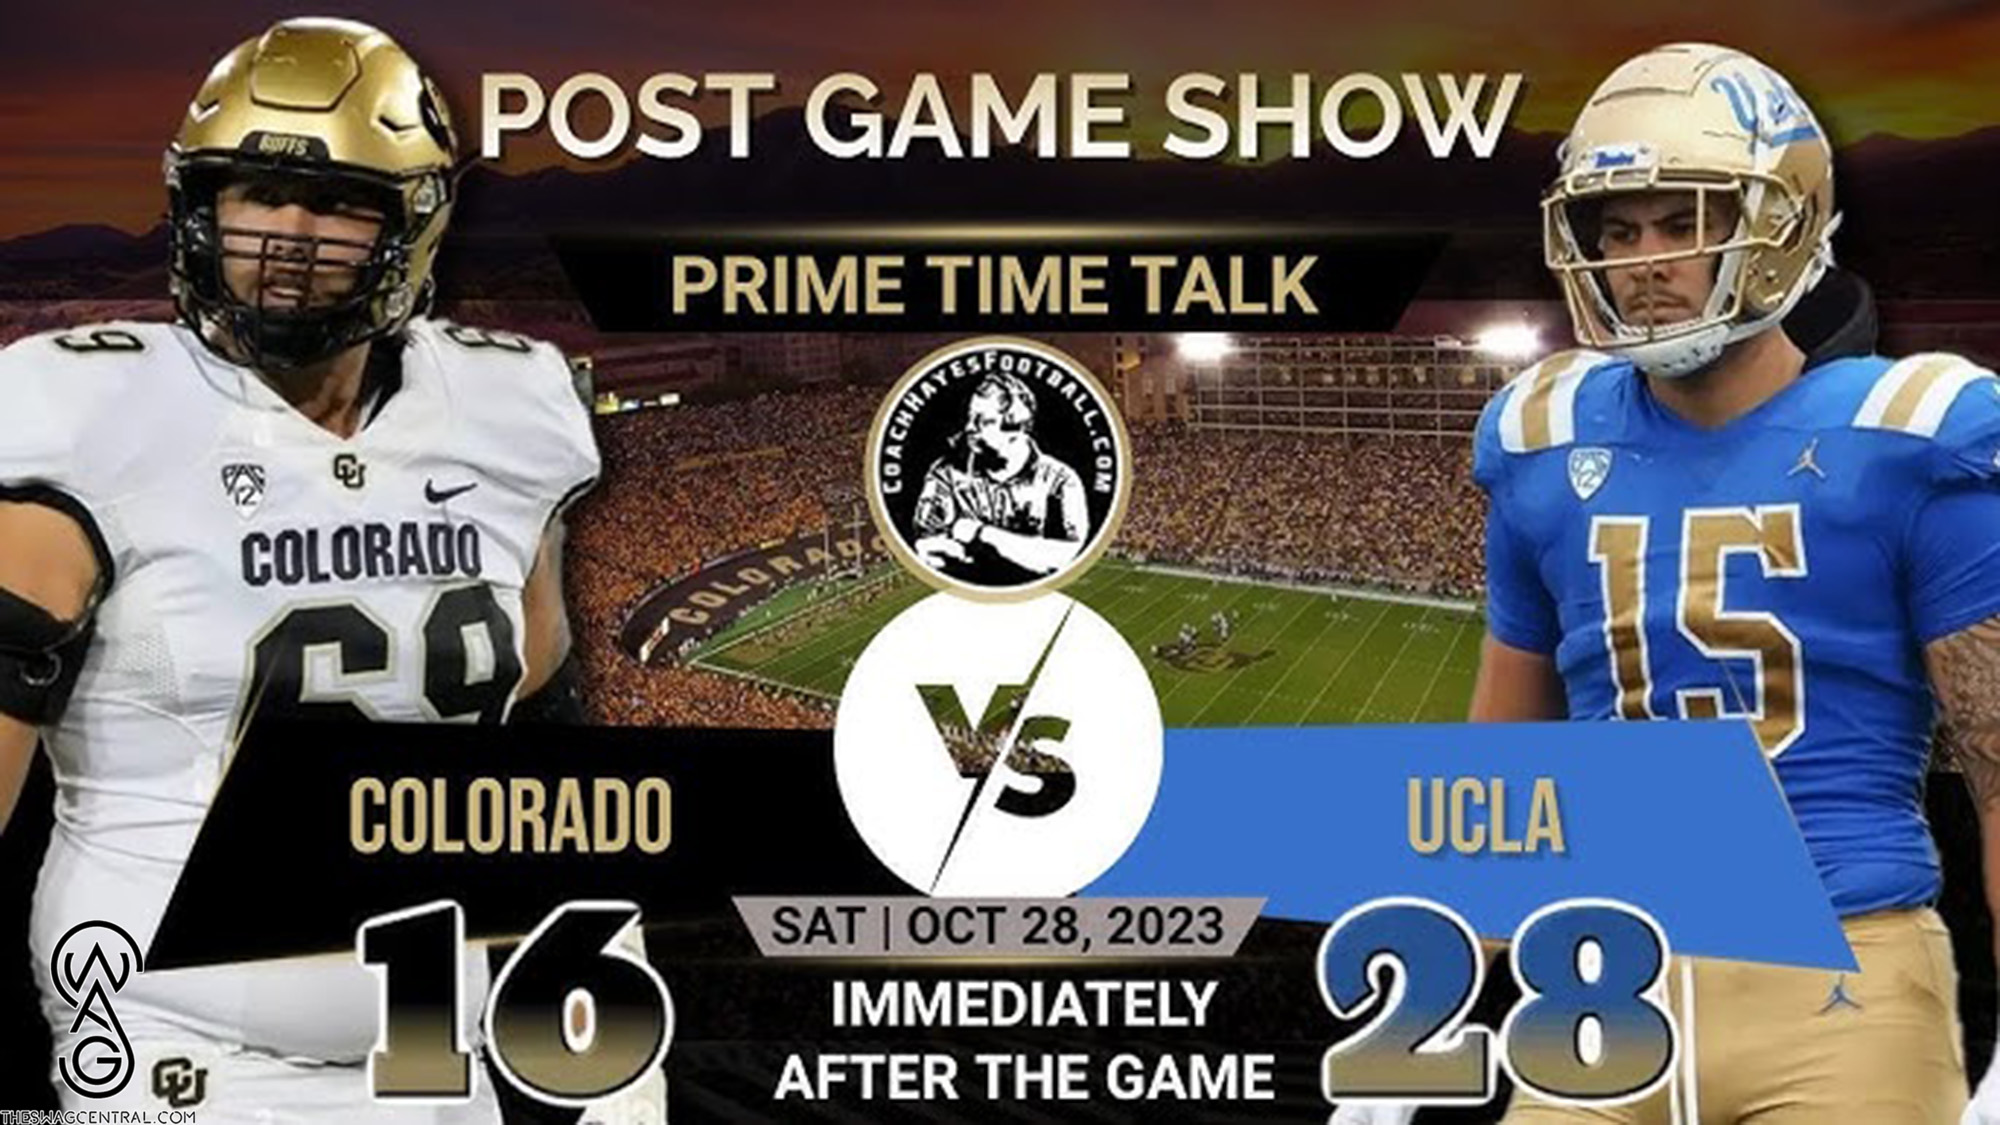 Battle for Supremacy UCLA Bruins vs. Colorado Buffaloes - October 2023 Clash